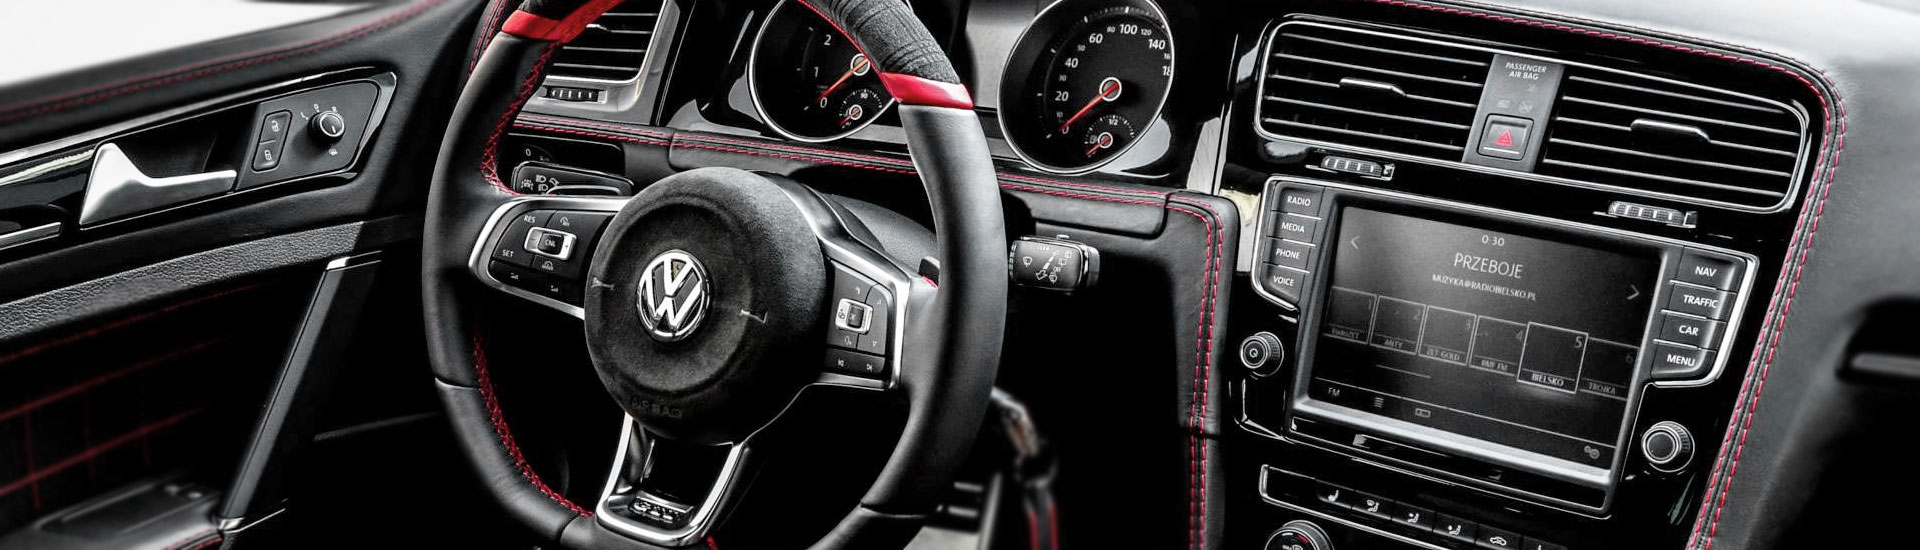 2015 Volkswagen CC Custom Dash Kits